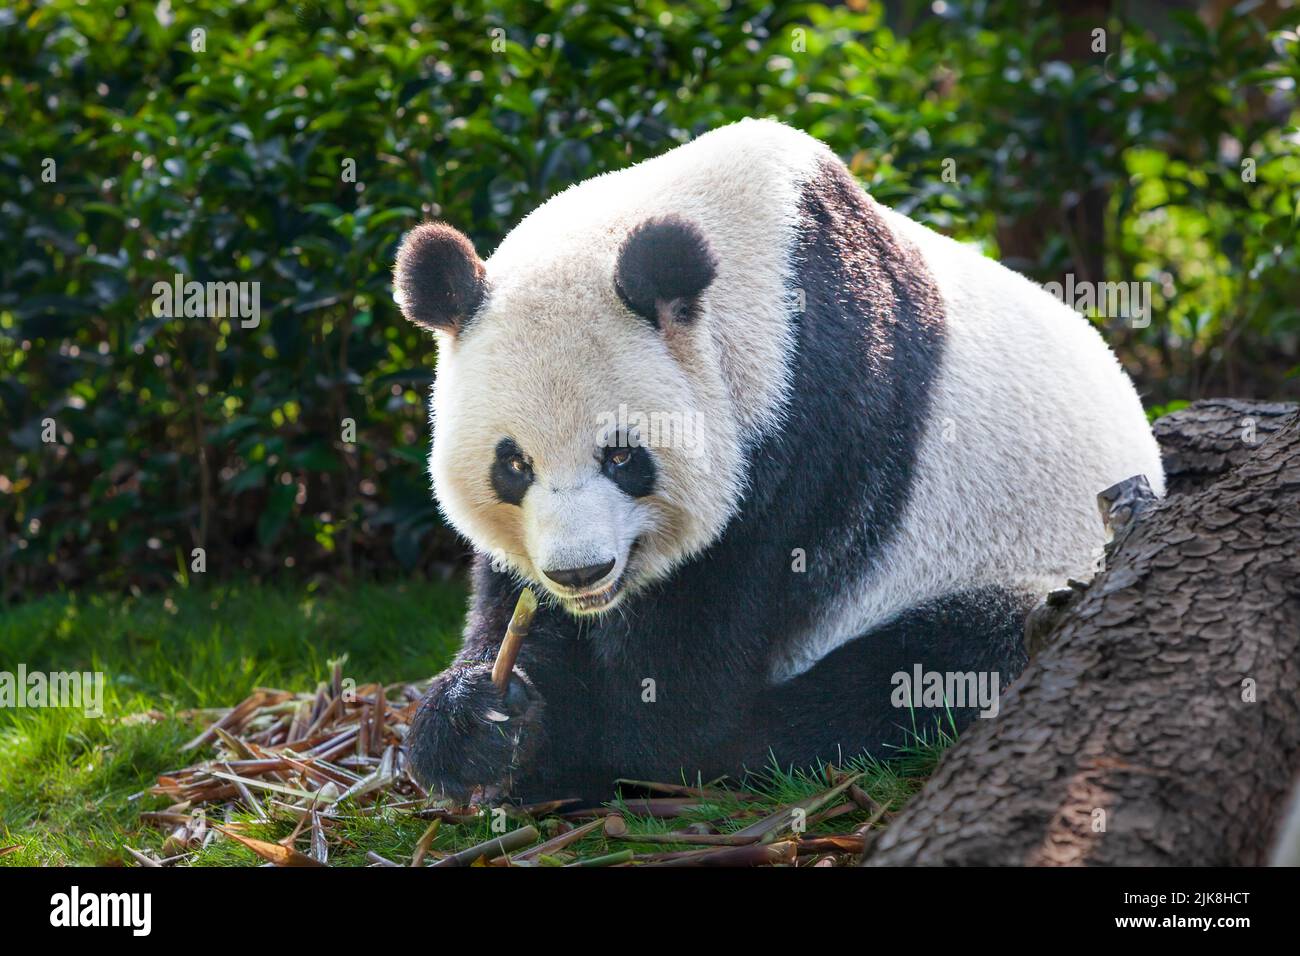 Giant Panda at the Panda Reserve in Chengdu, China, Asia. Stock Photo